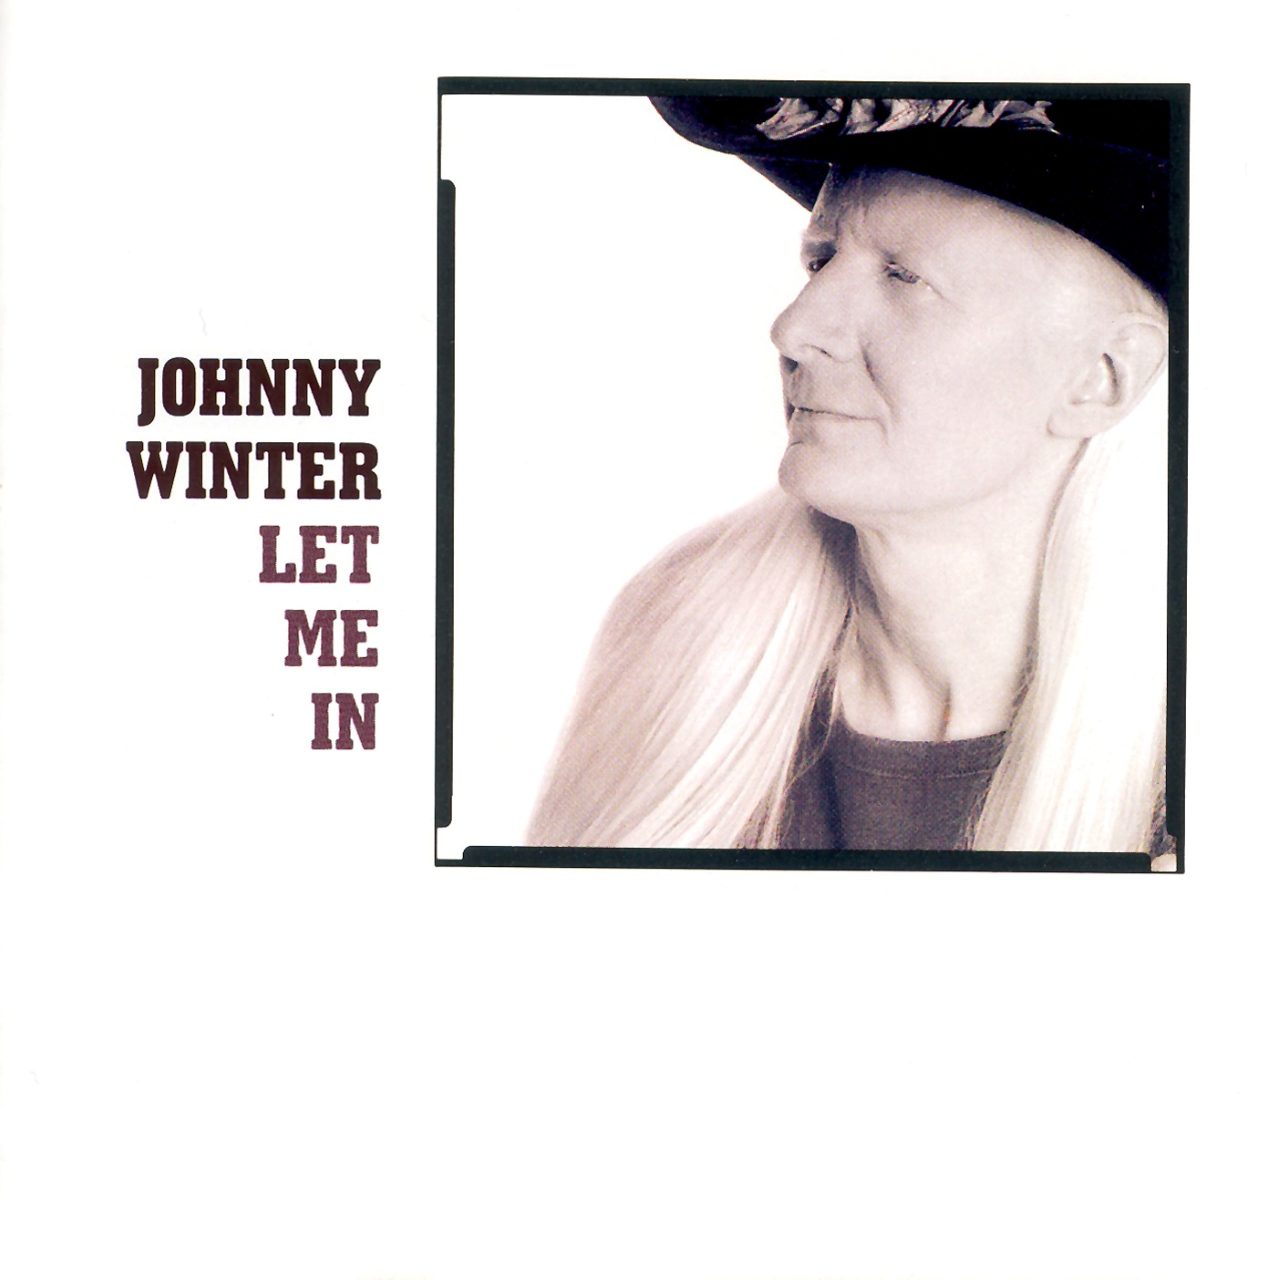 Johnny Winter – Let Me In cover album